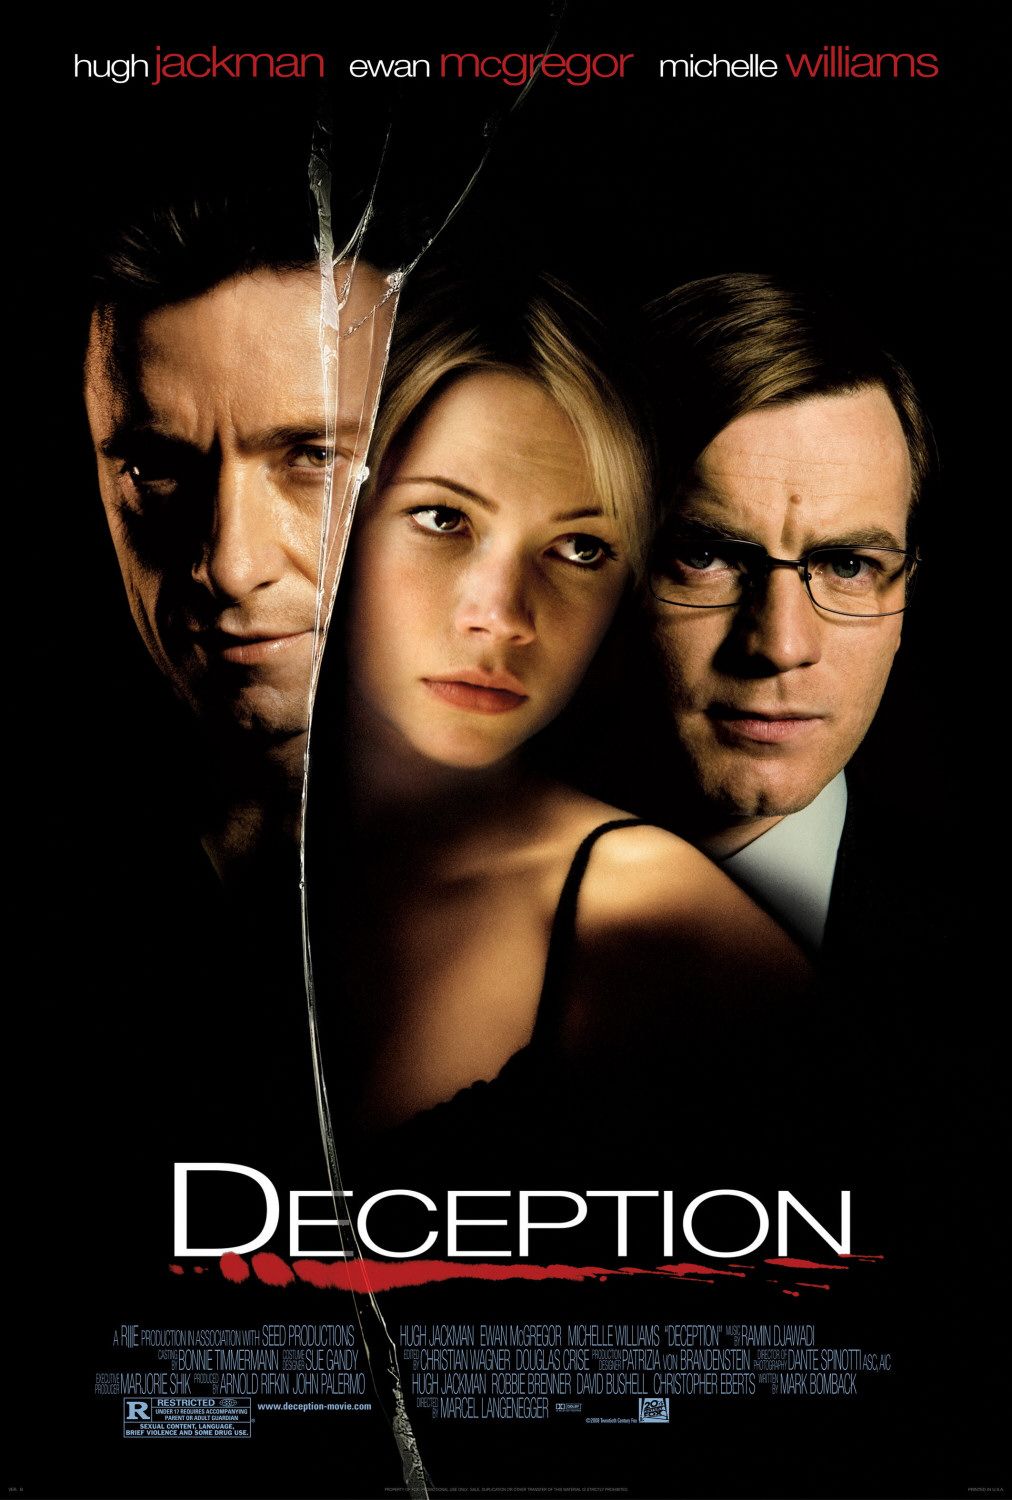 Deception-Poster-002.jpg